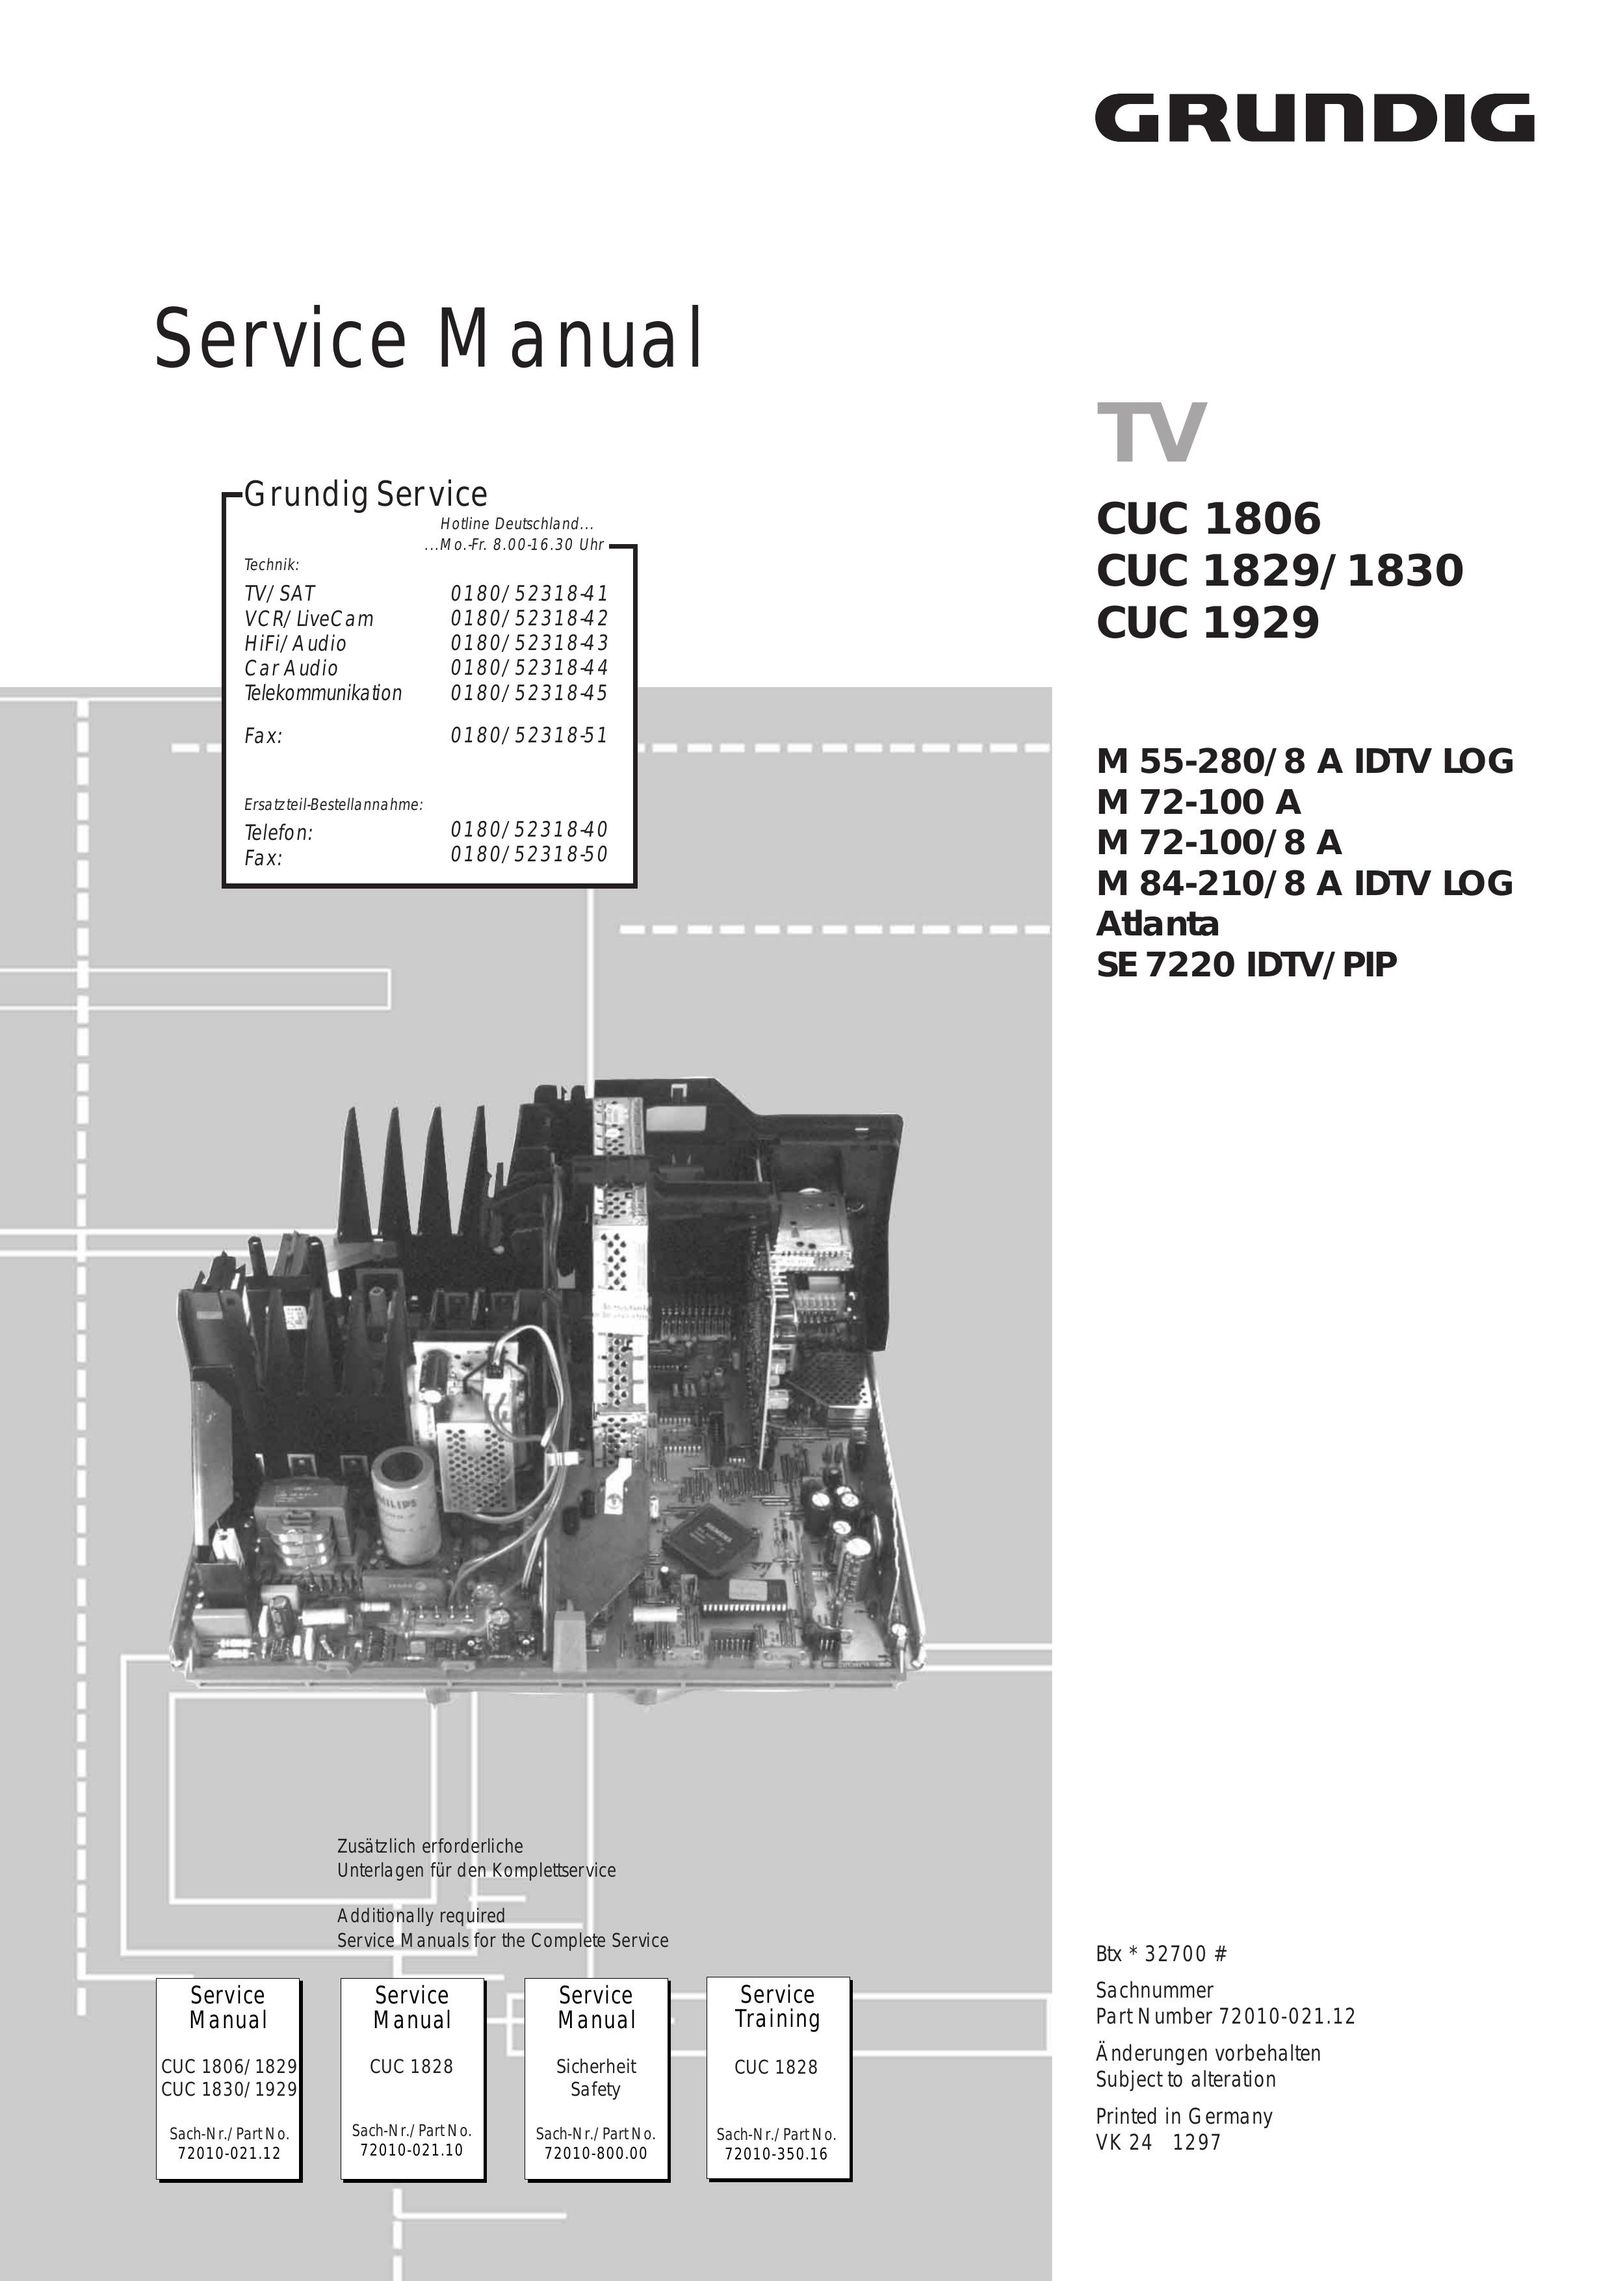 Grundig M-72-100/8 A Computer Hardware User Manual